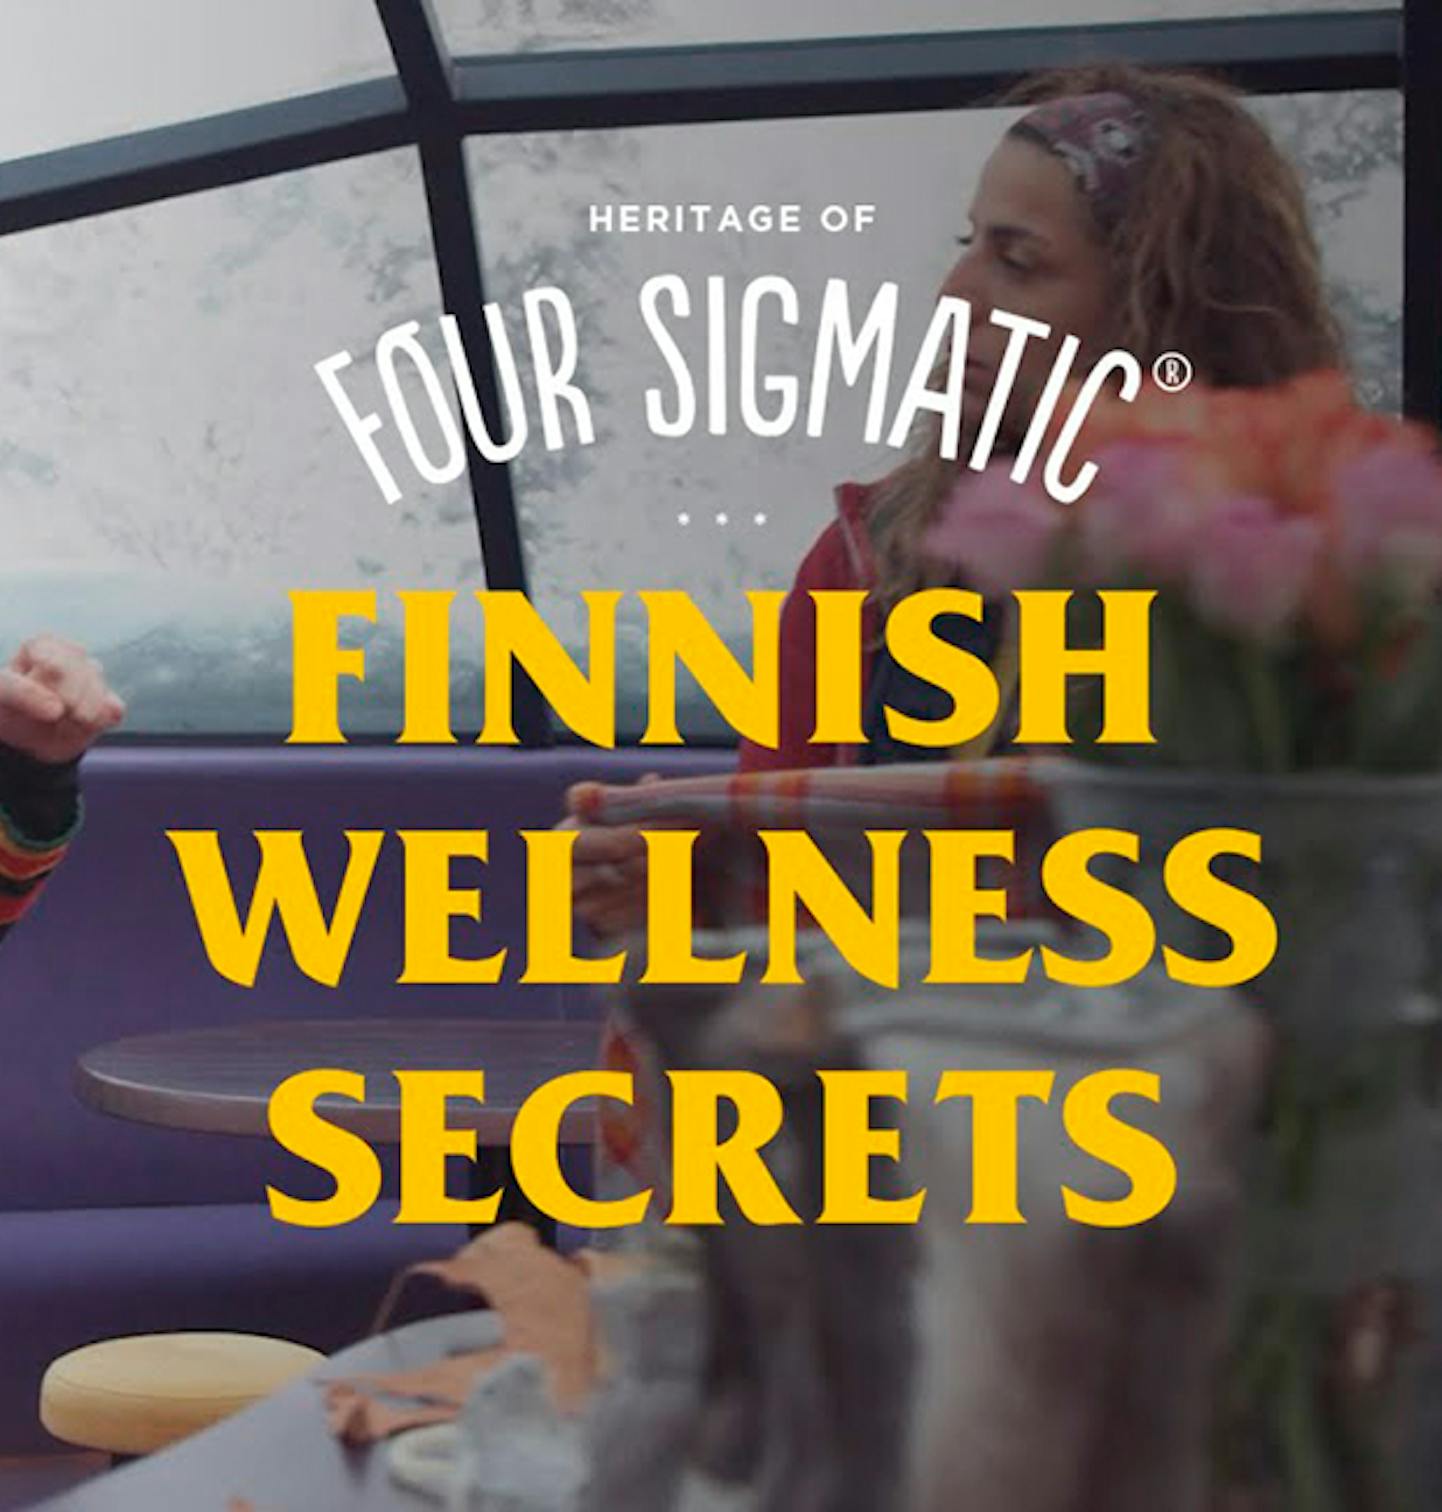 Finnish wellness secrets